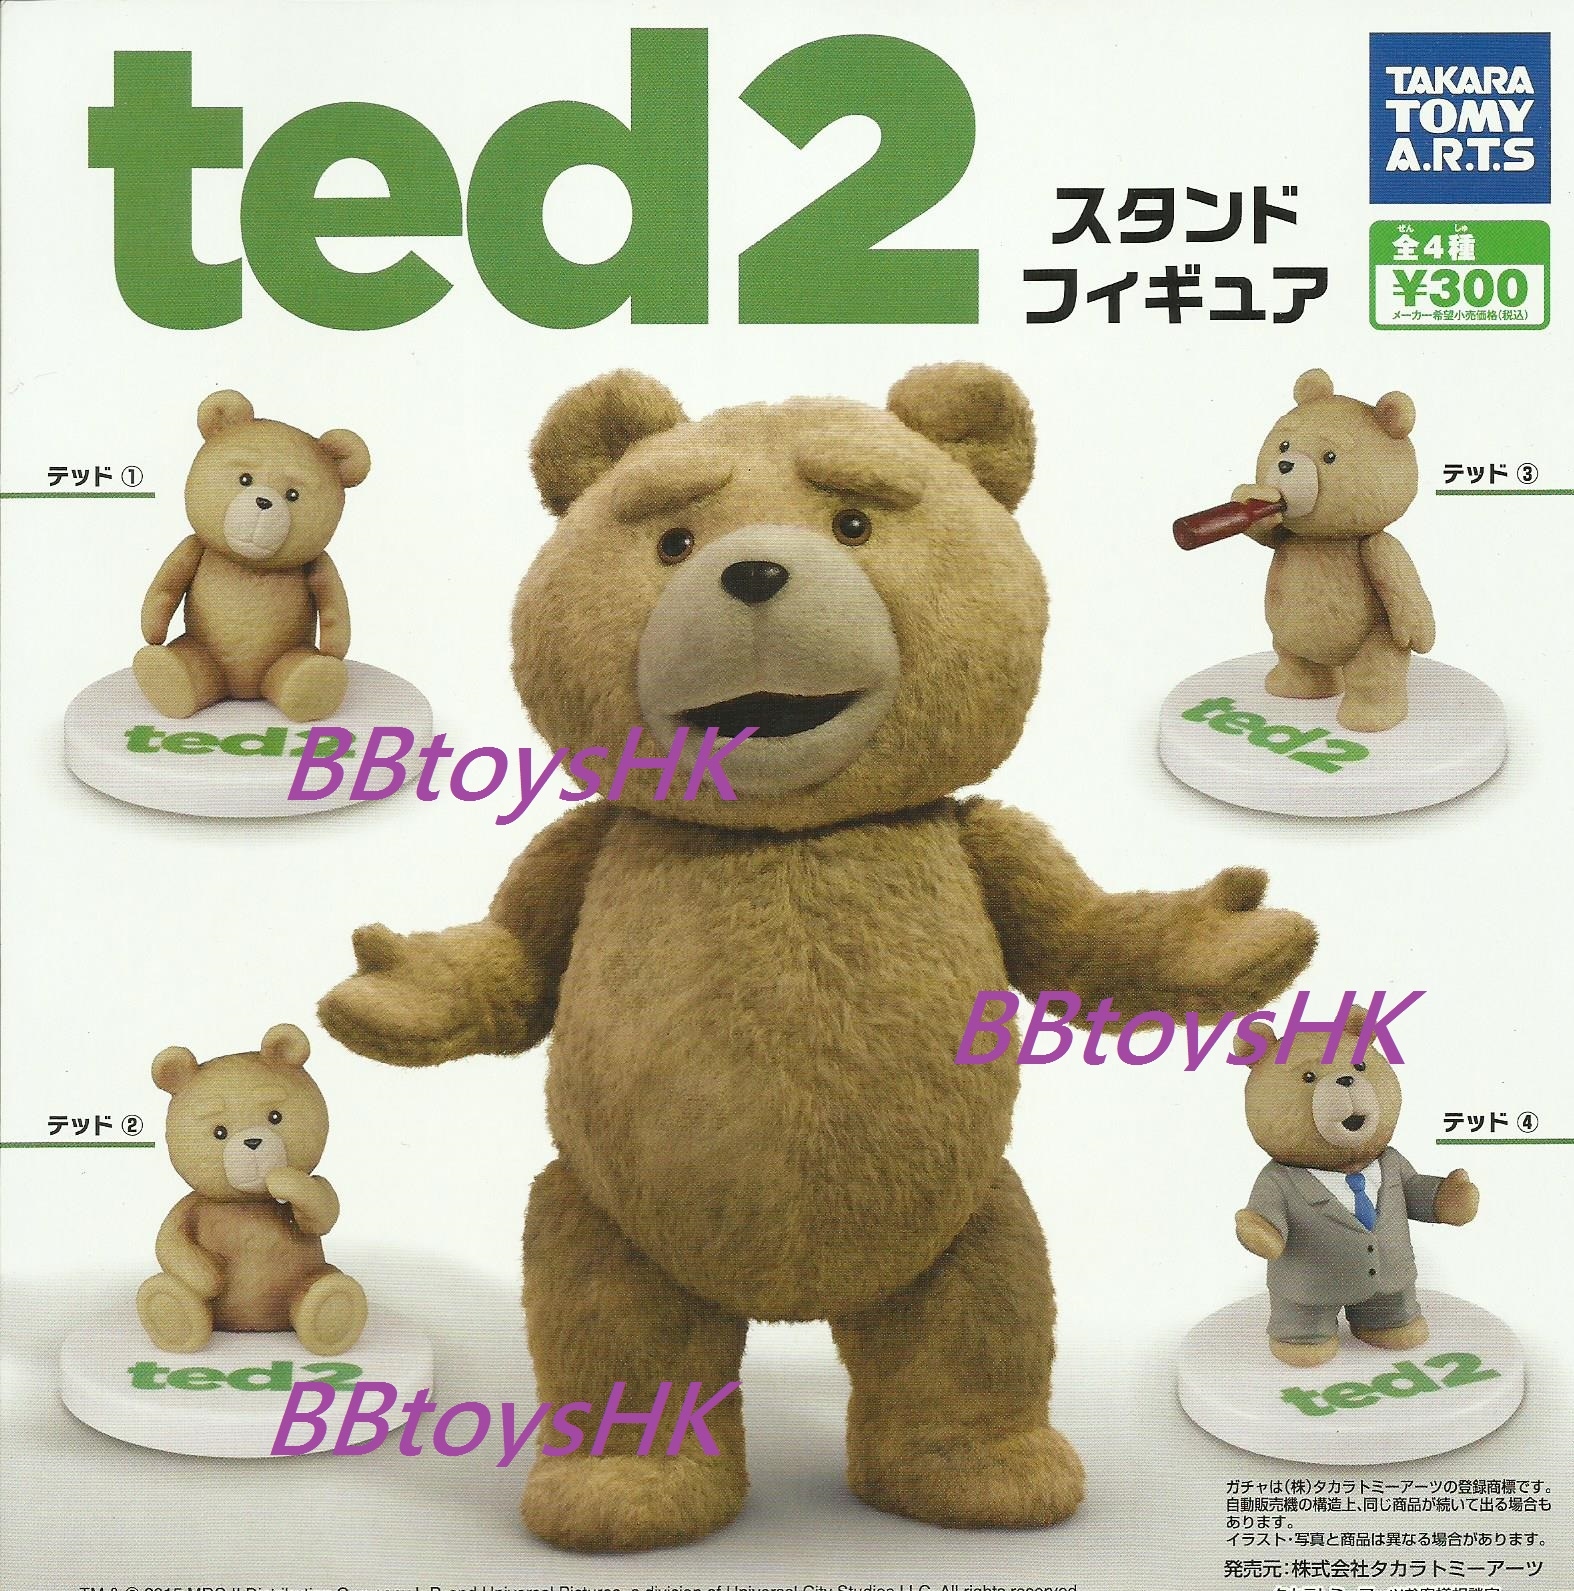 Takara Tomy Arts Gashapon Ted 2 Figure Set